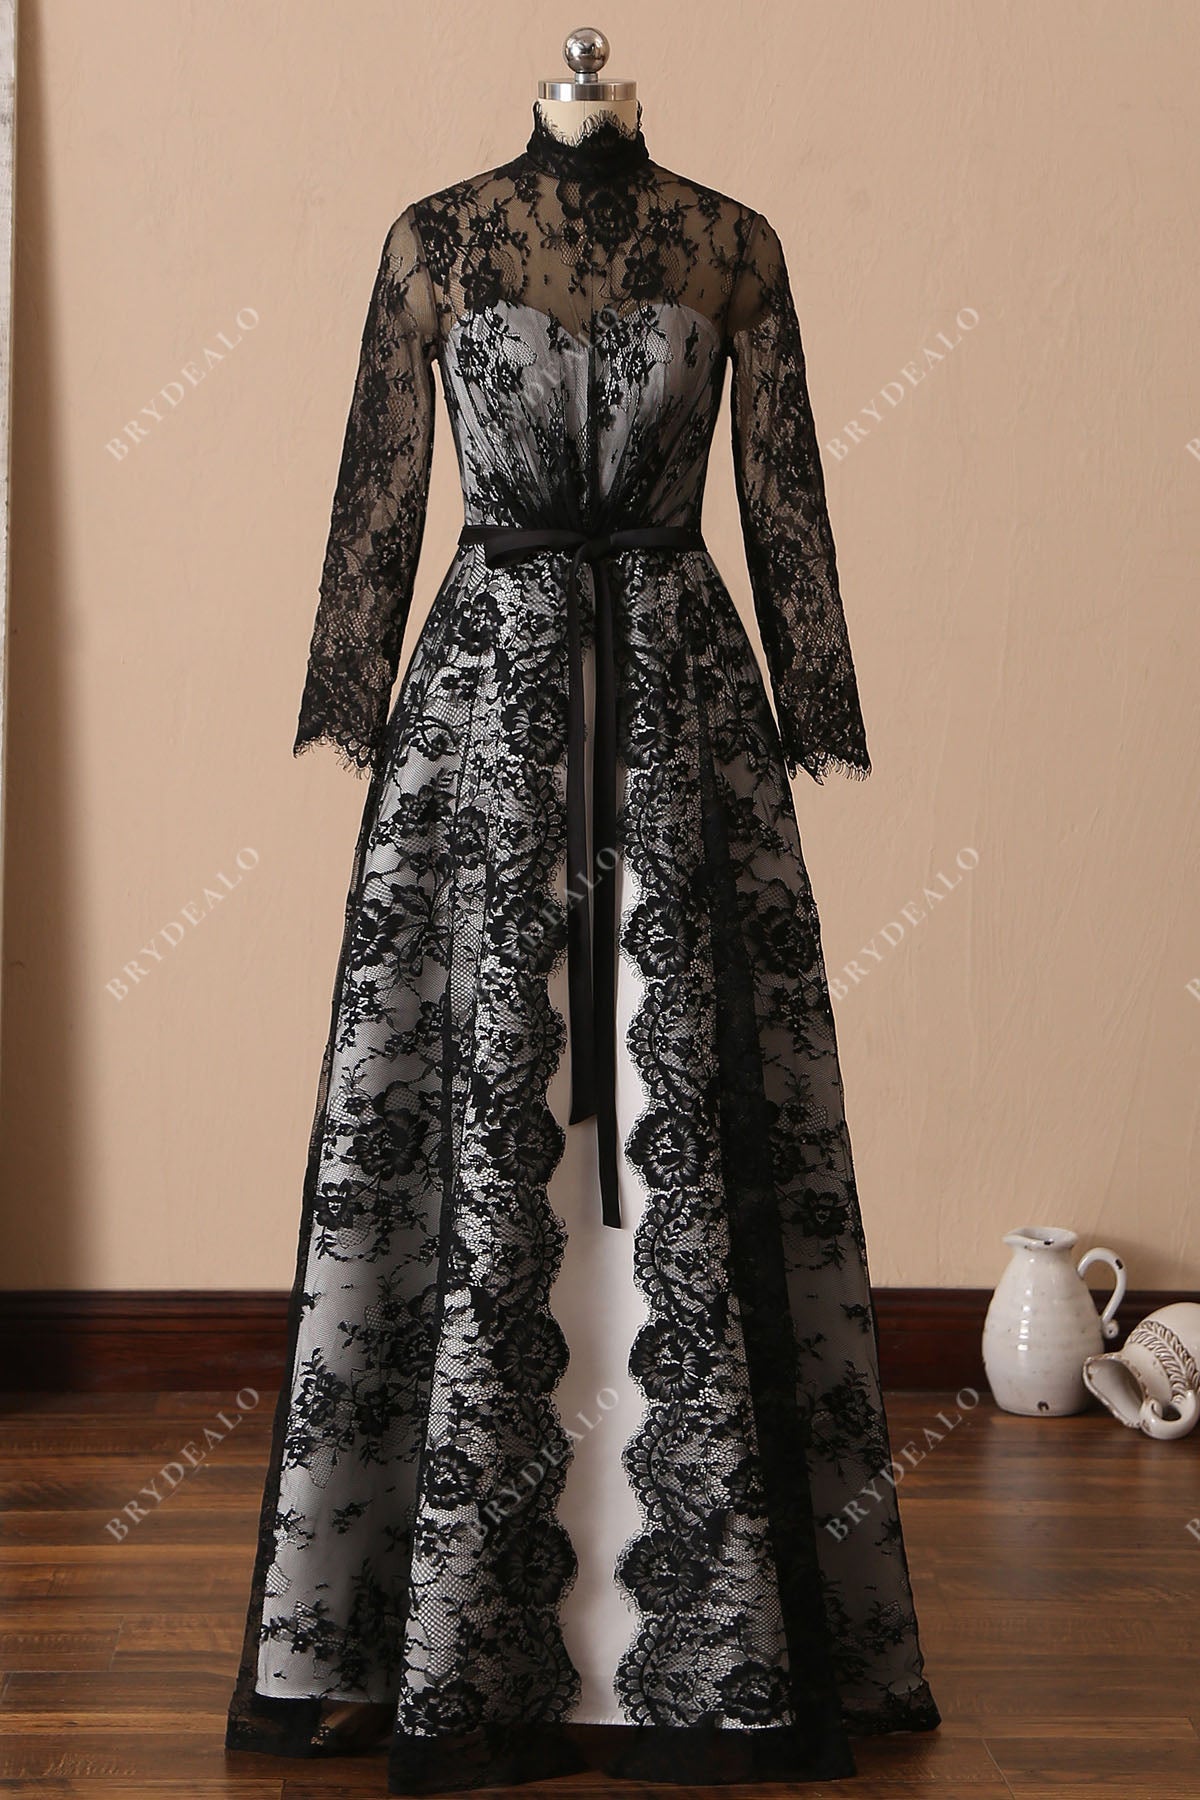 Unique Black Lace Overlaid White Satin Gothic Bridal Dress